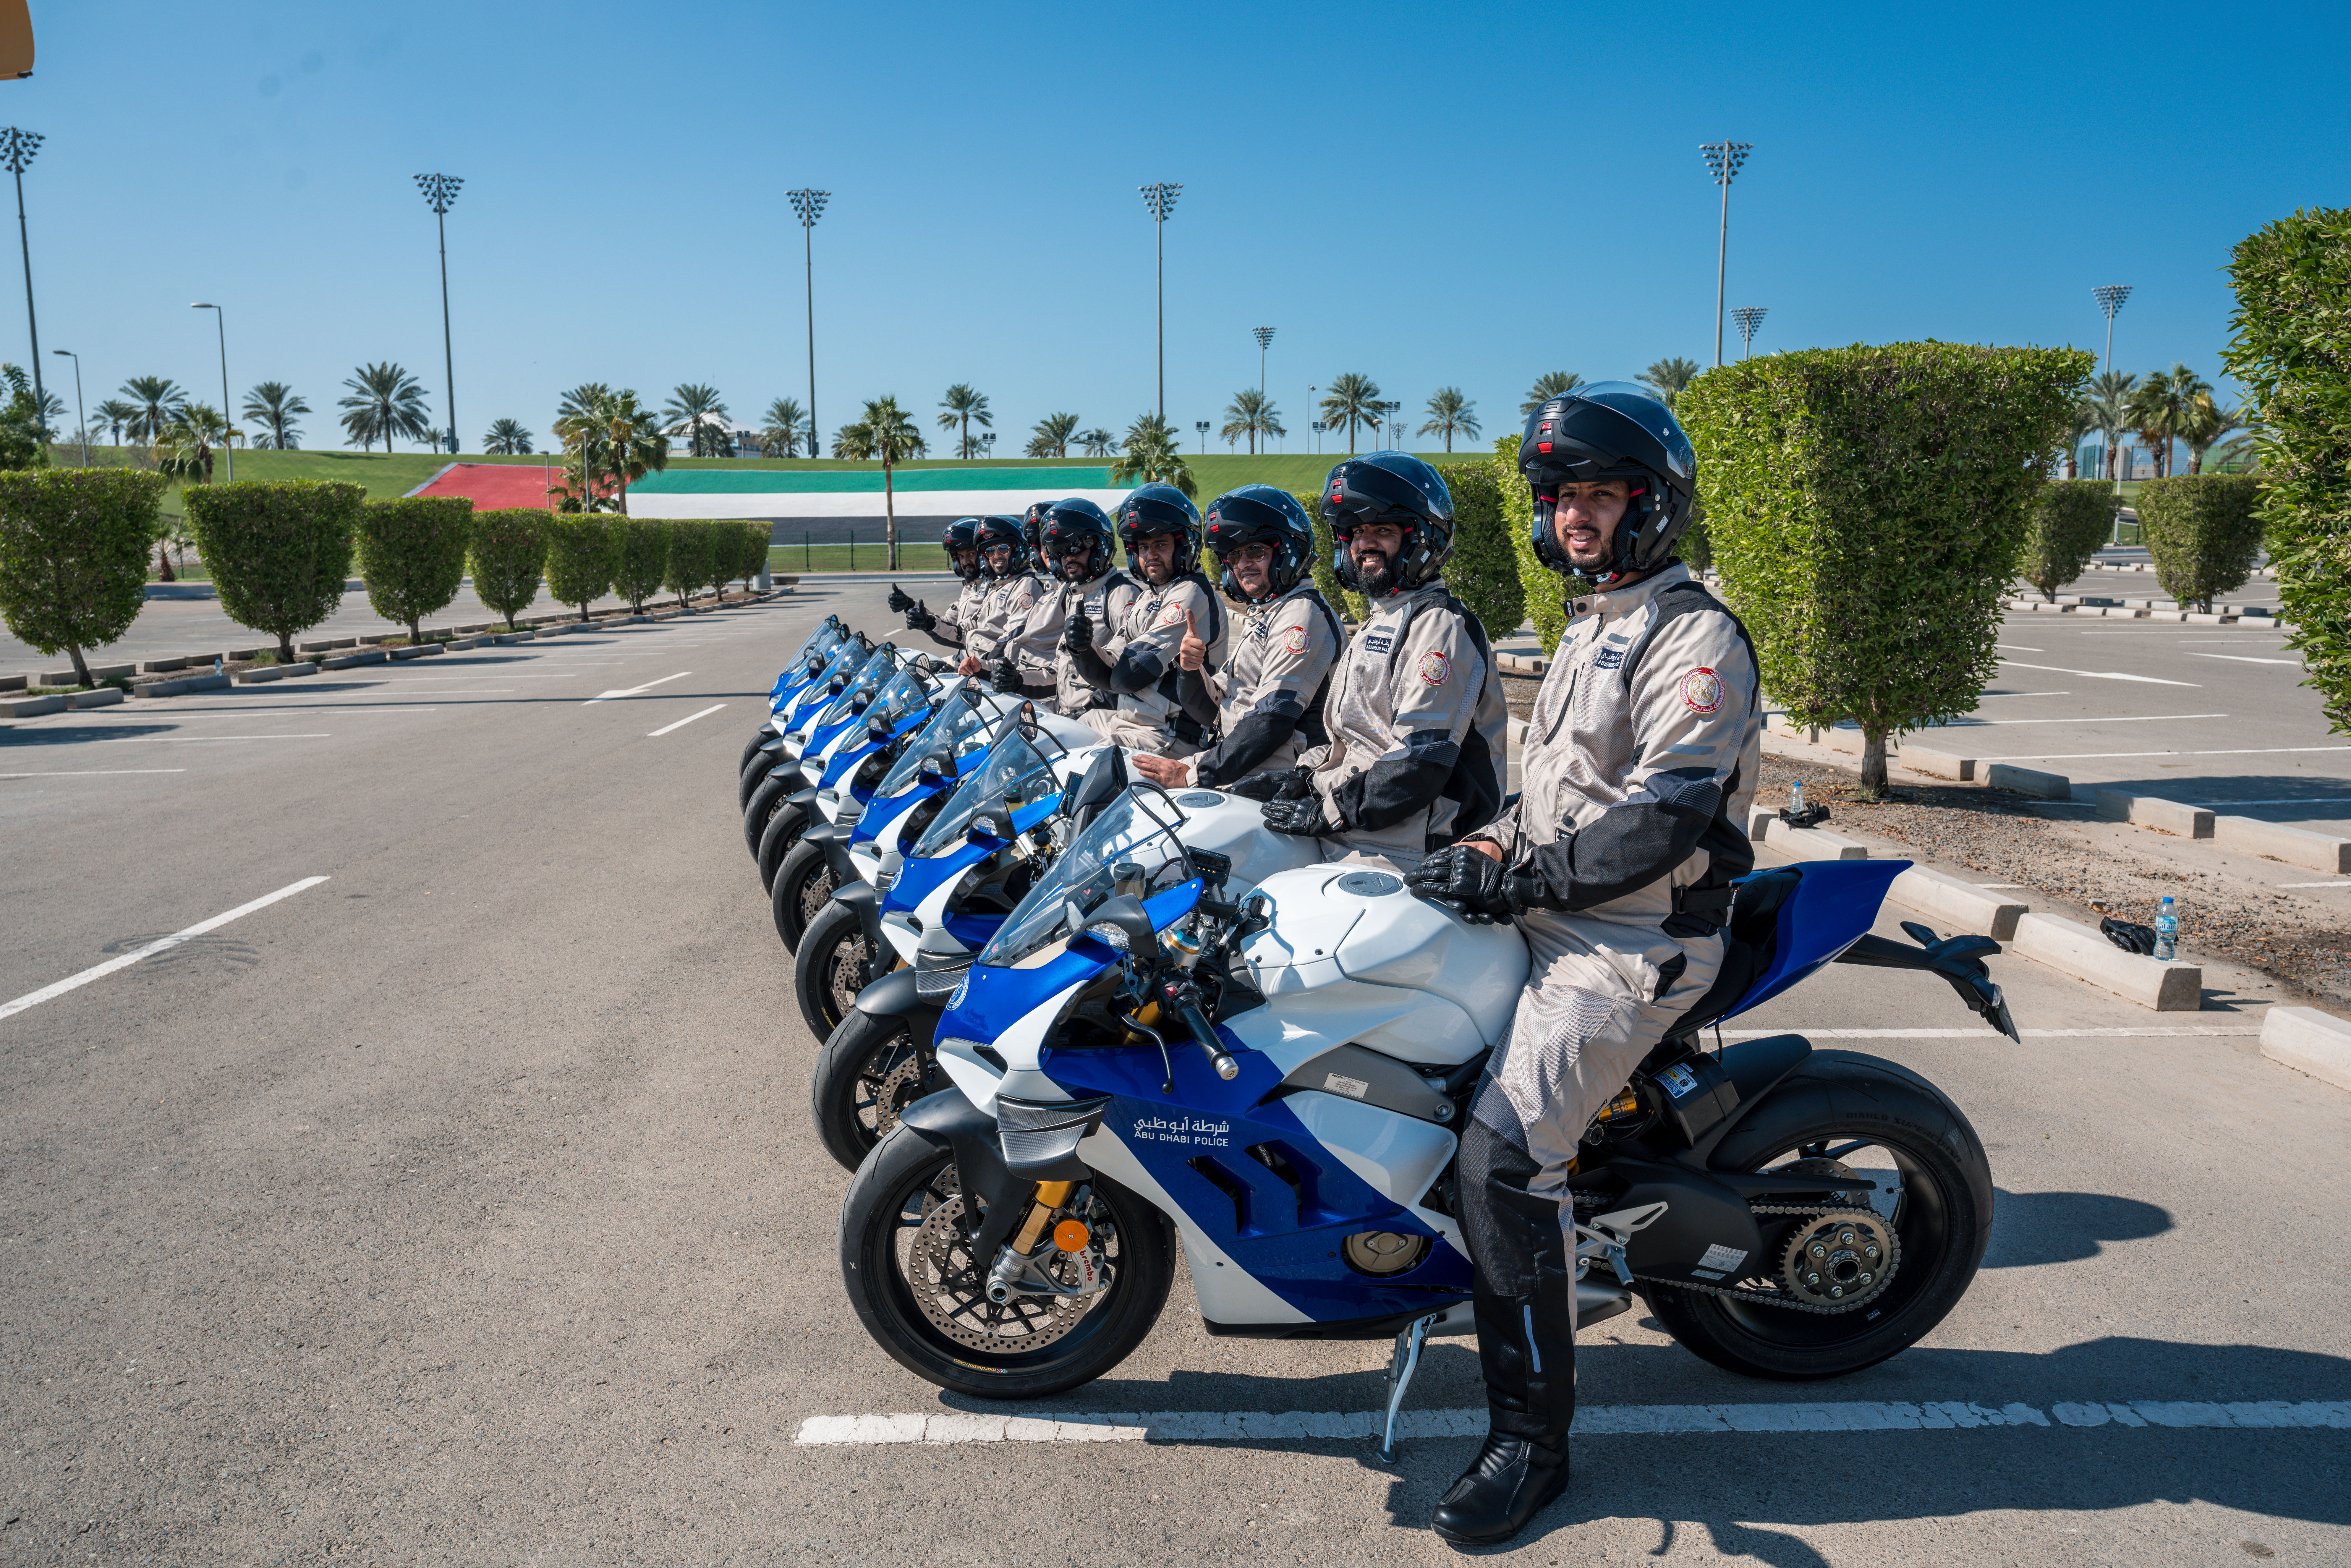 Ducati UAE provides Abu Dhabi Police with 12 new Panigale V4 R sport bikes